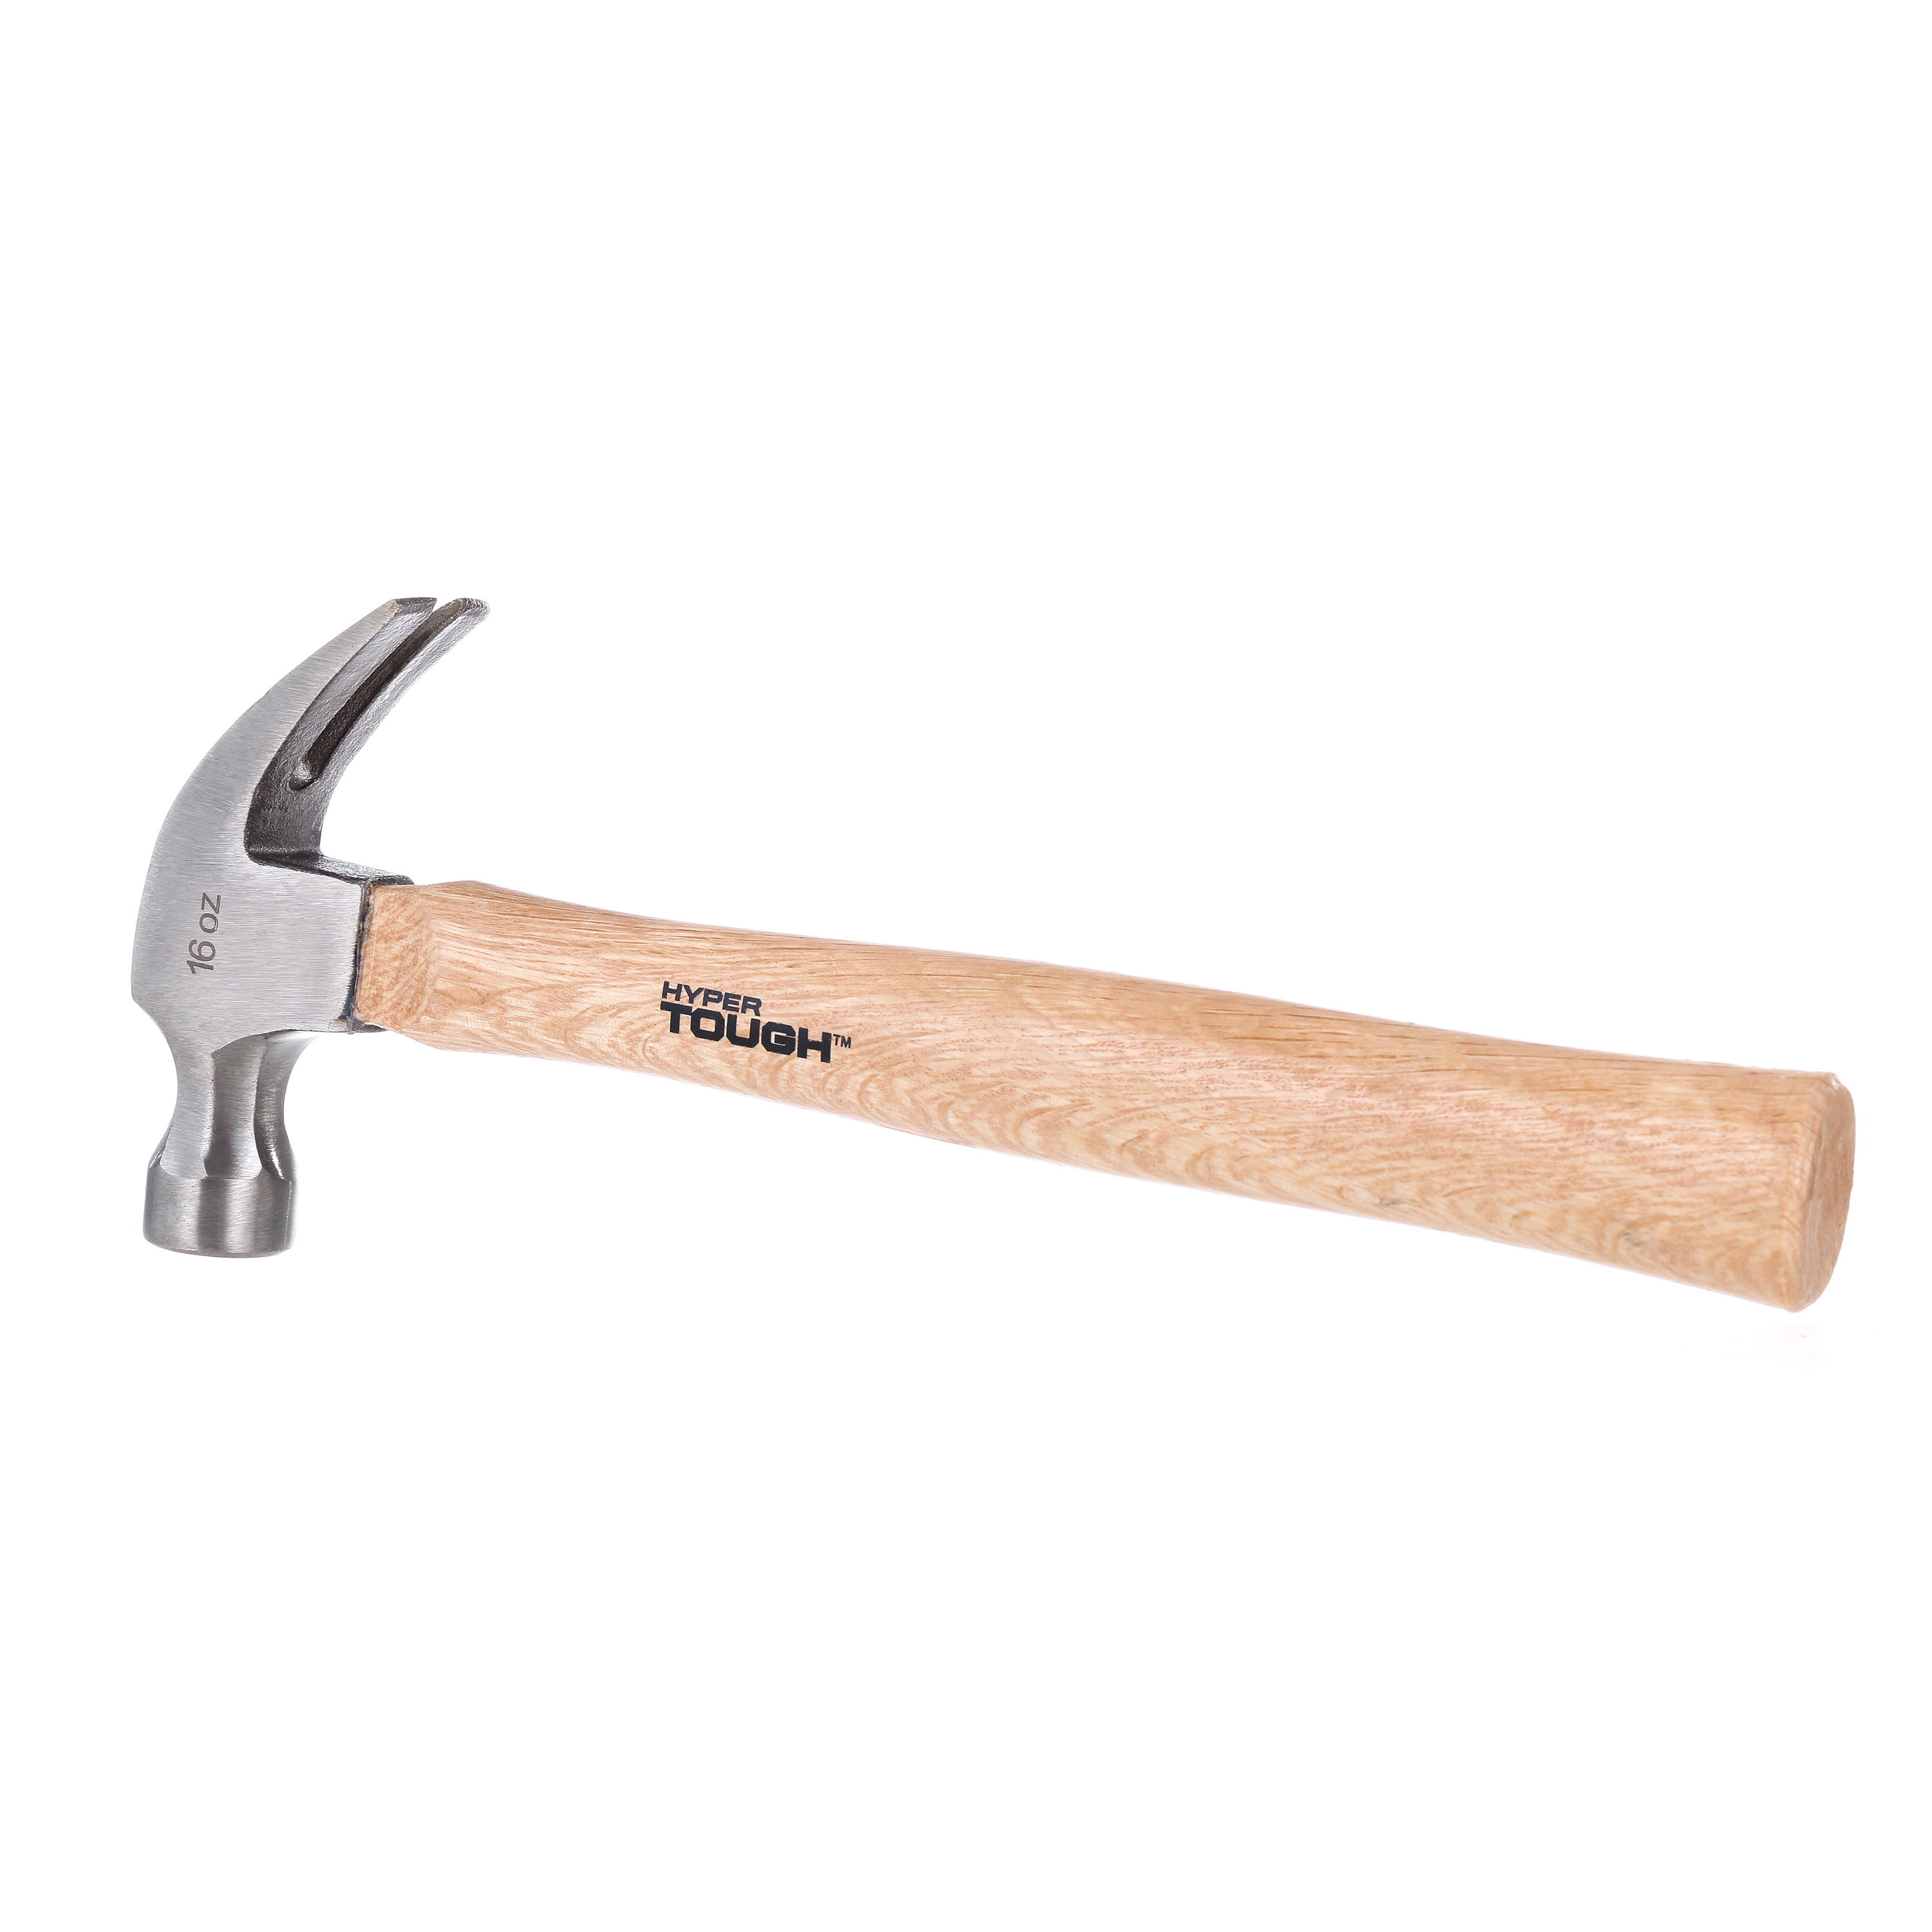 Hyper Tough 16 Ounce Wood Hammer - image 3 of 8